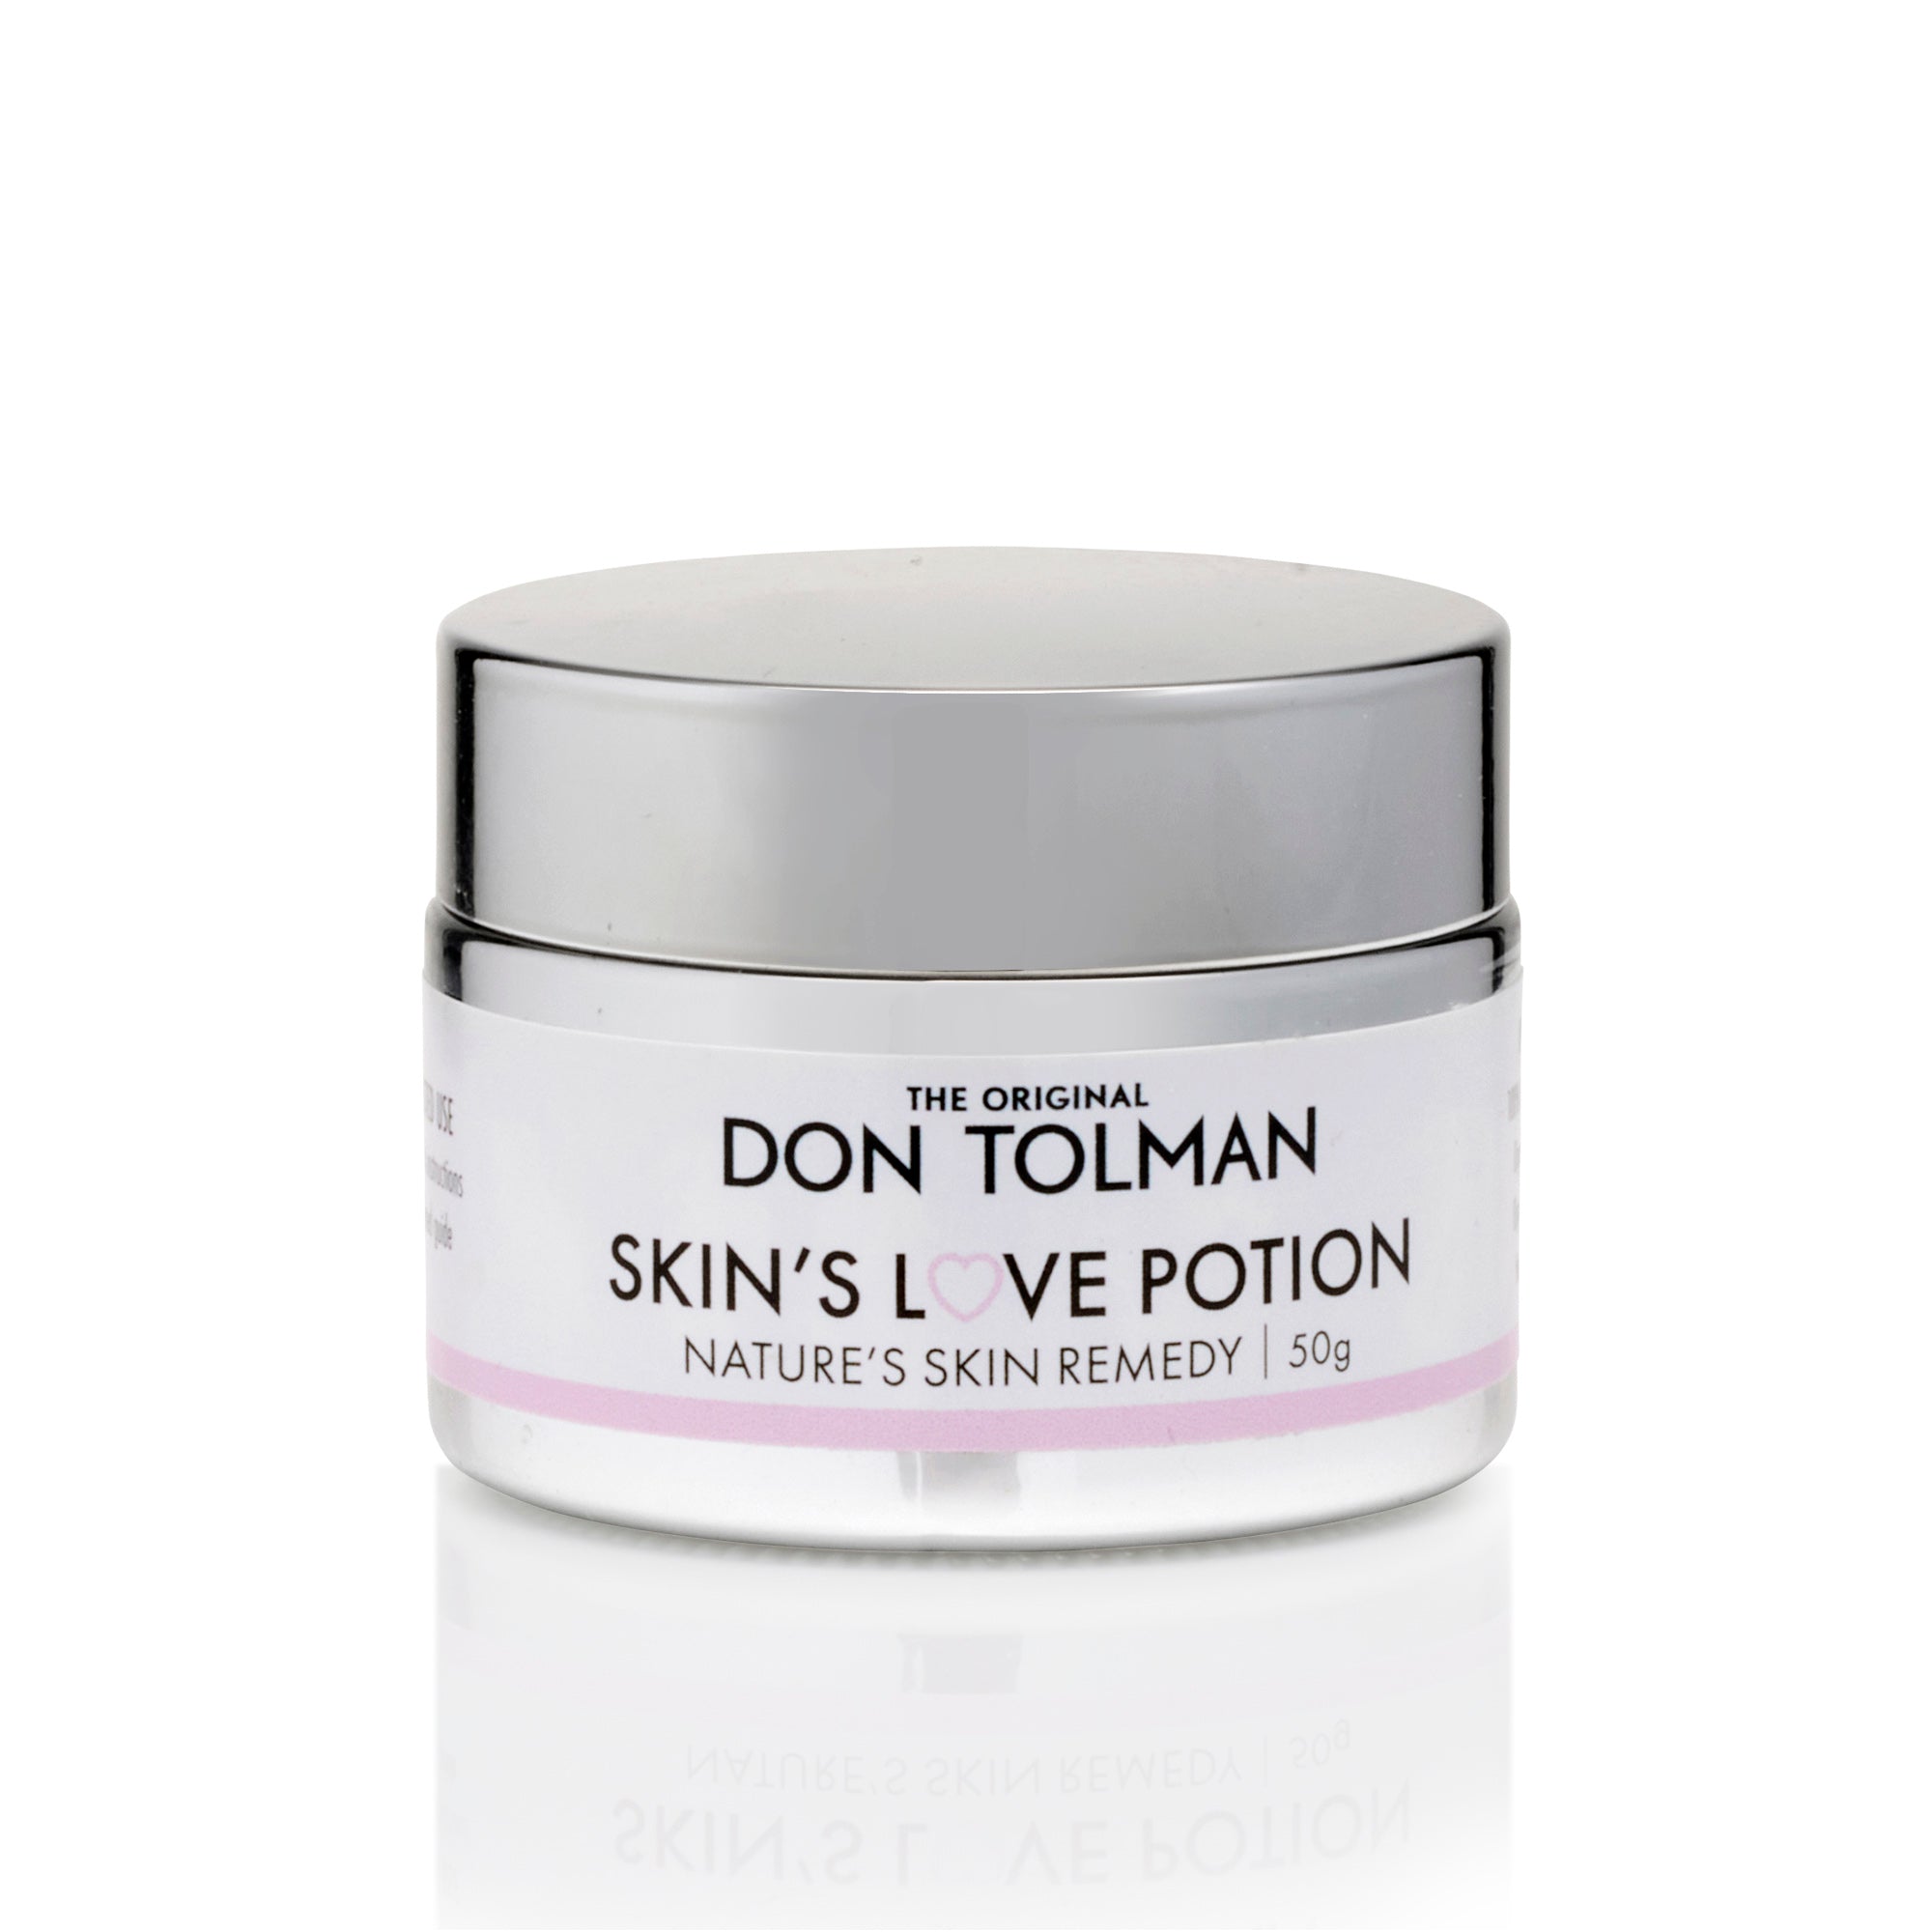 Don Tolman Skins Love Potion - Alkaline World